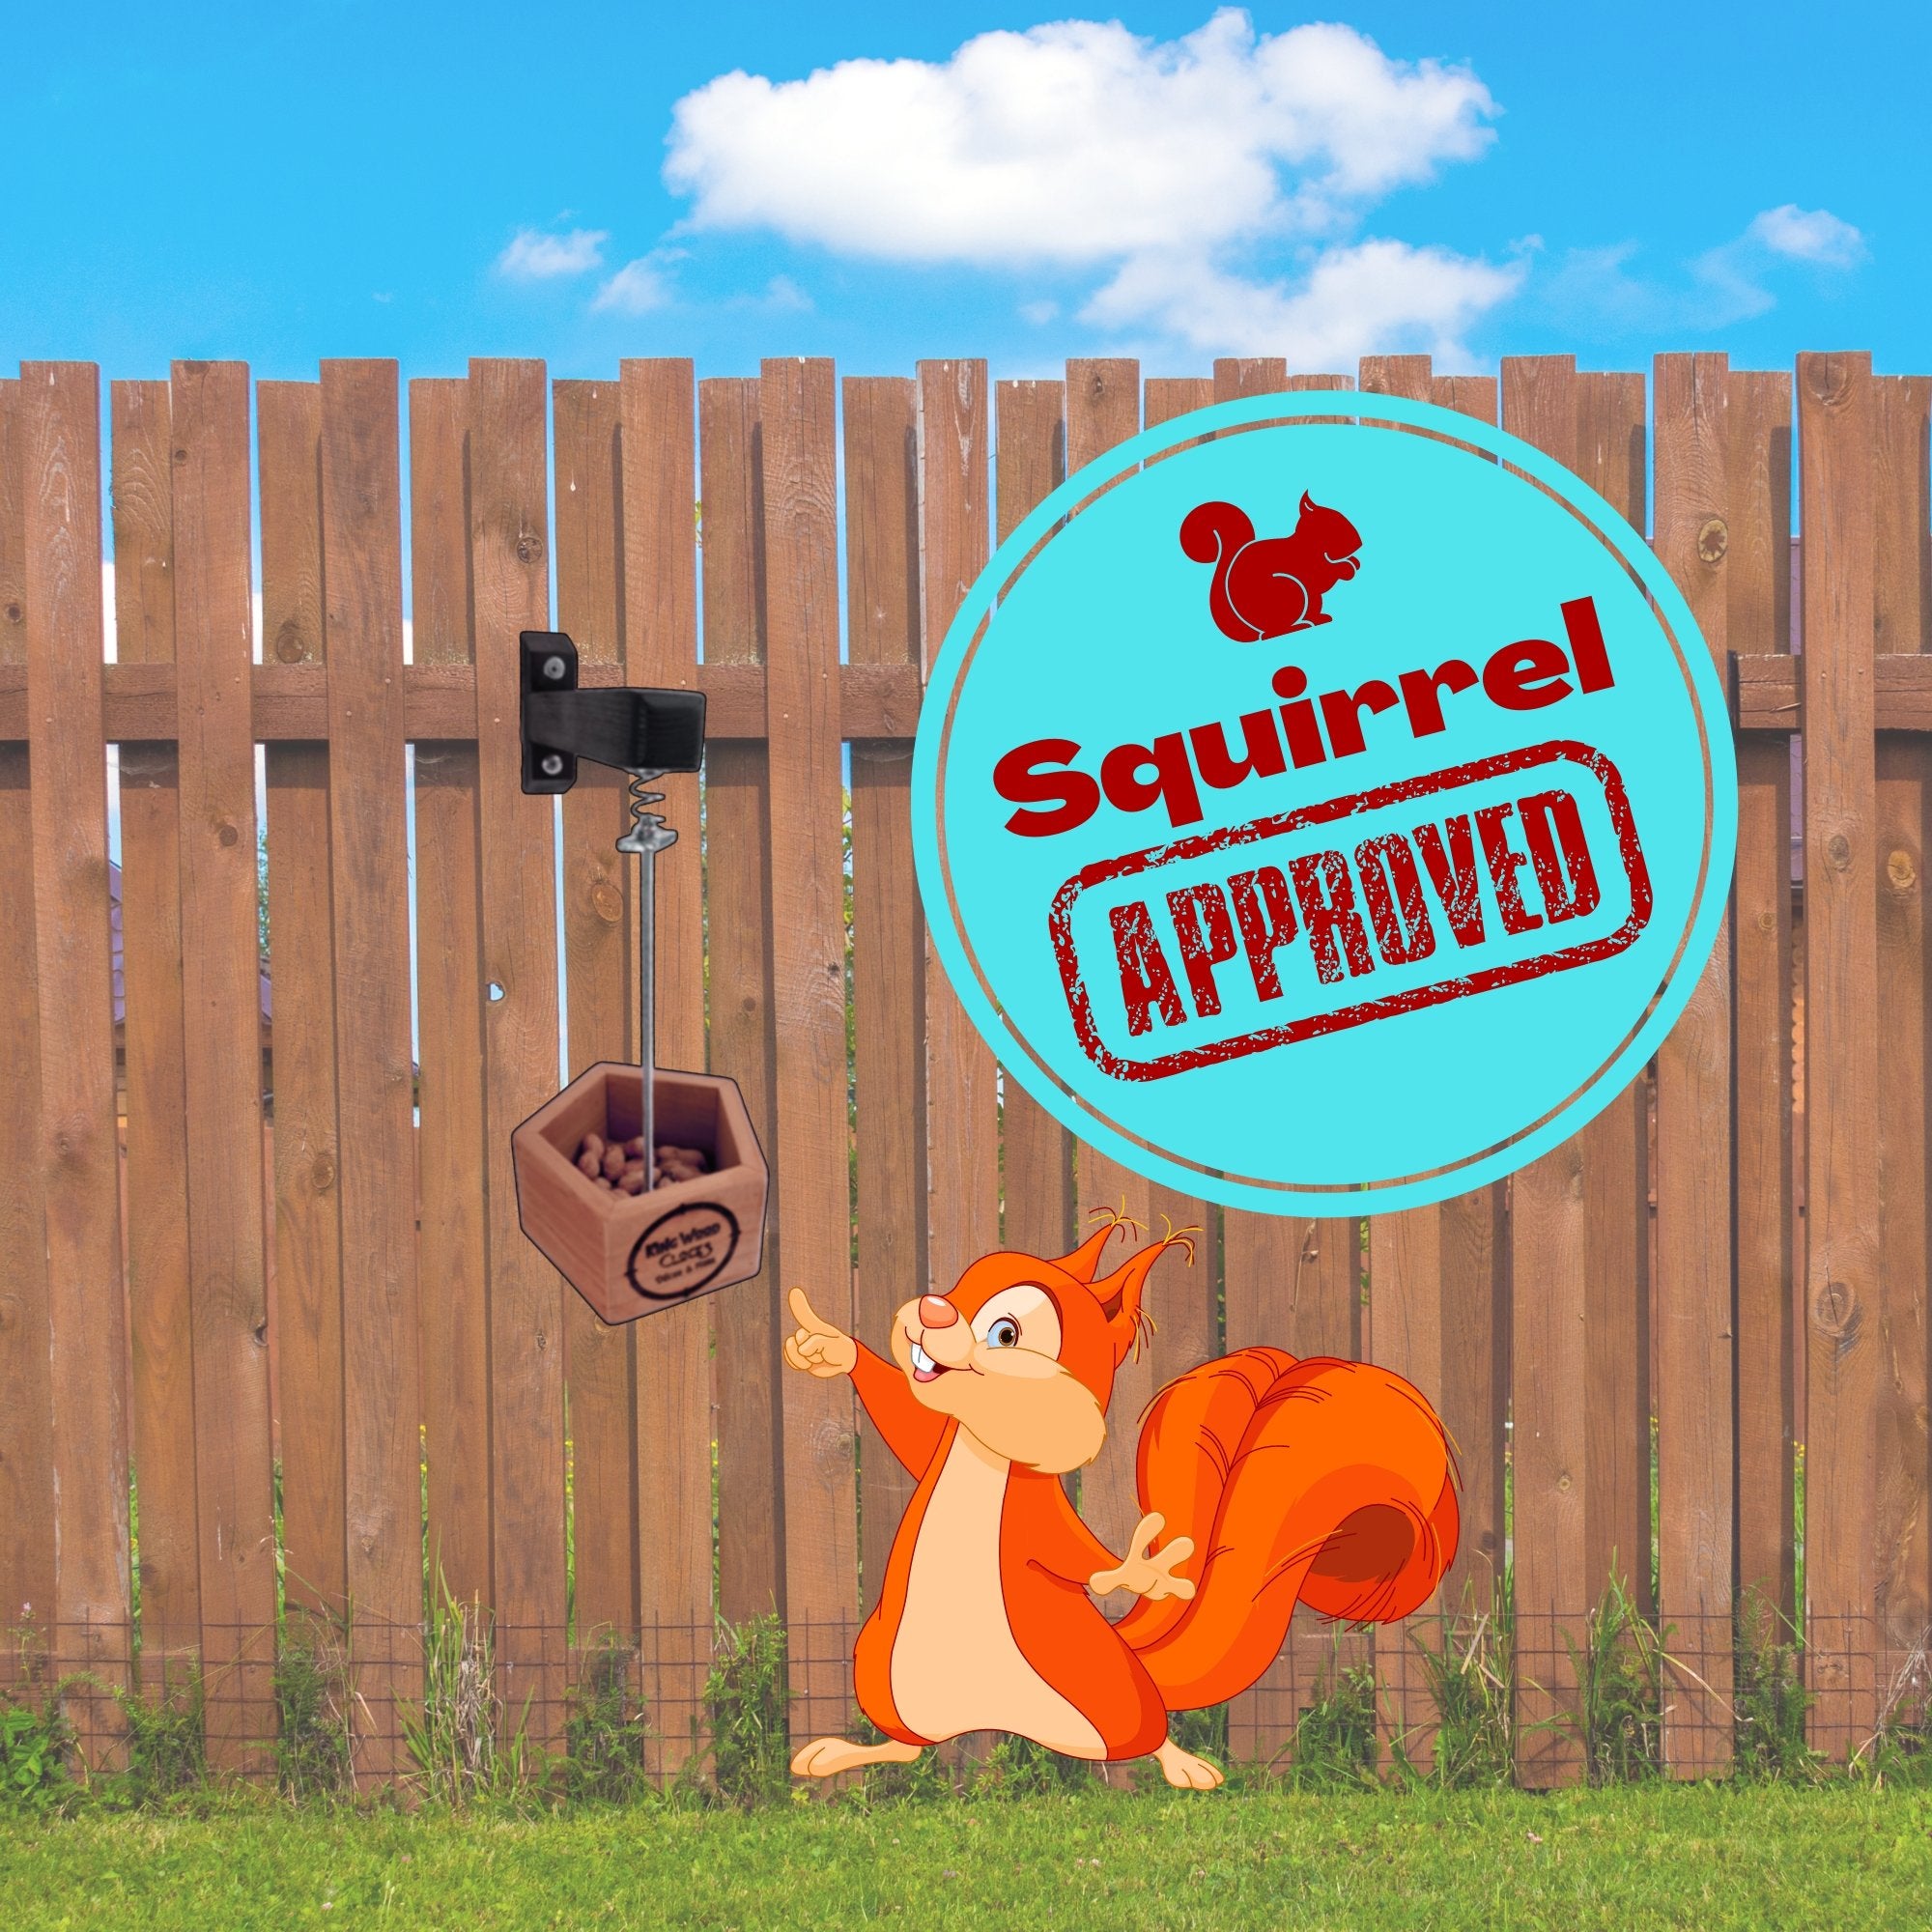 KingWood Nut Basket Squirrel Feeder 2 Pack is squirrel approved